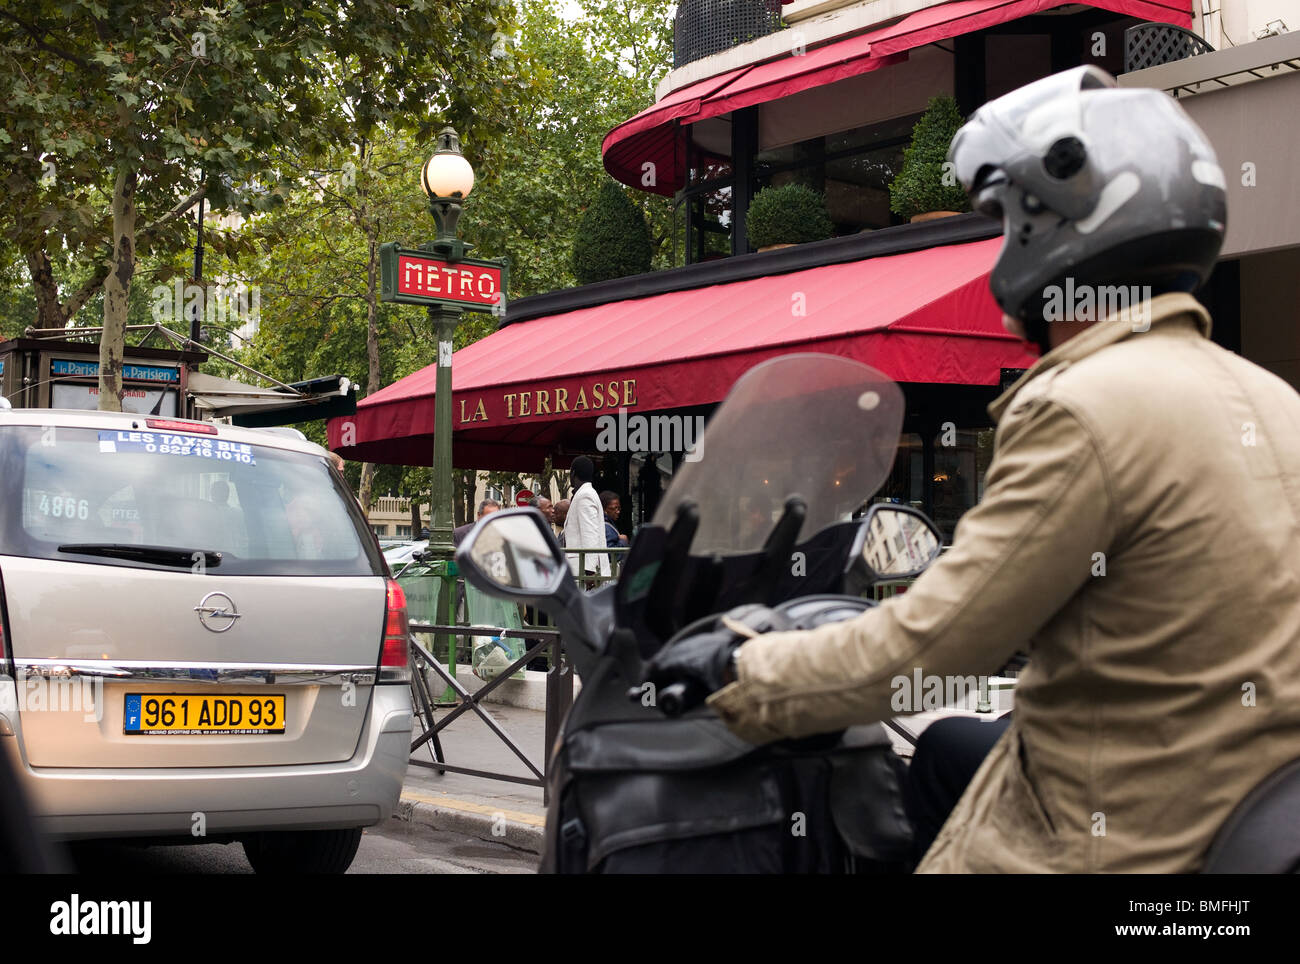 Scena di strada, Parigi, Francia Foto Stock